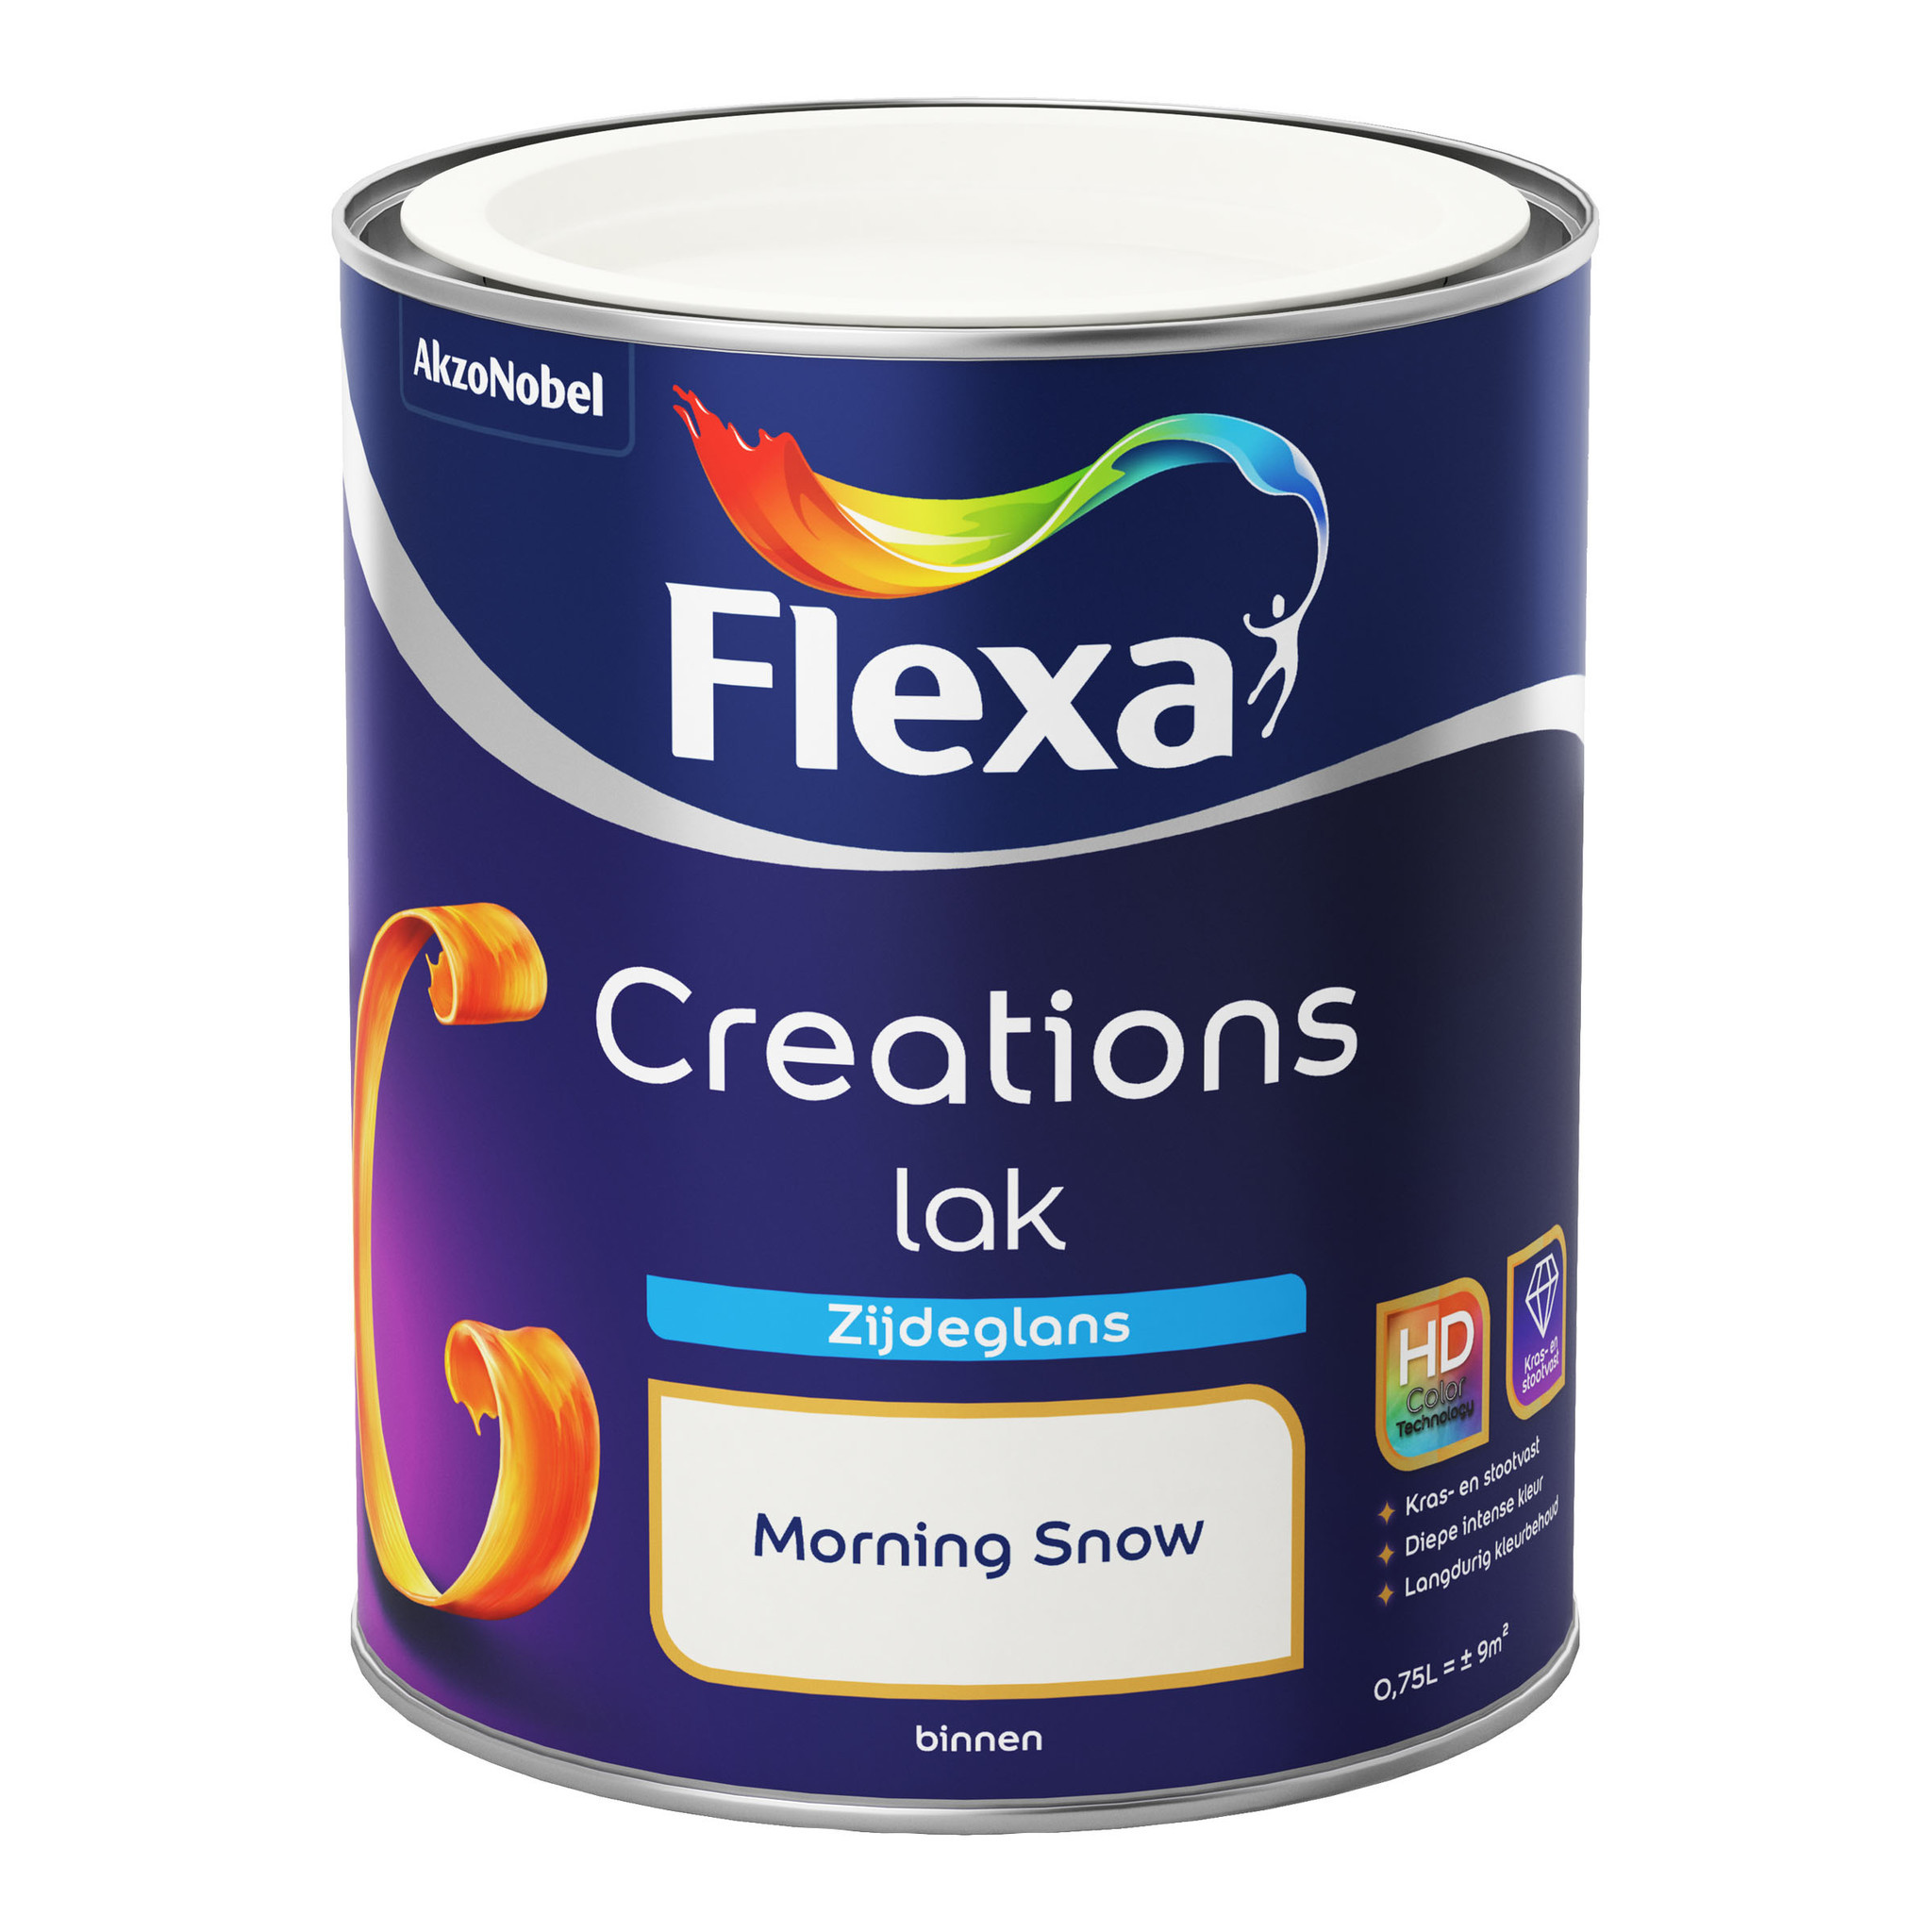 Flexa Creations Lak Zijdeglans - Morning Snow